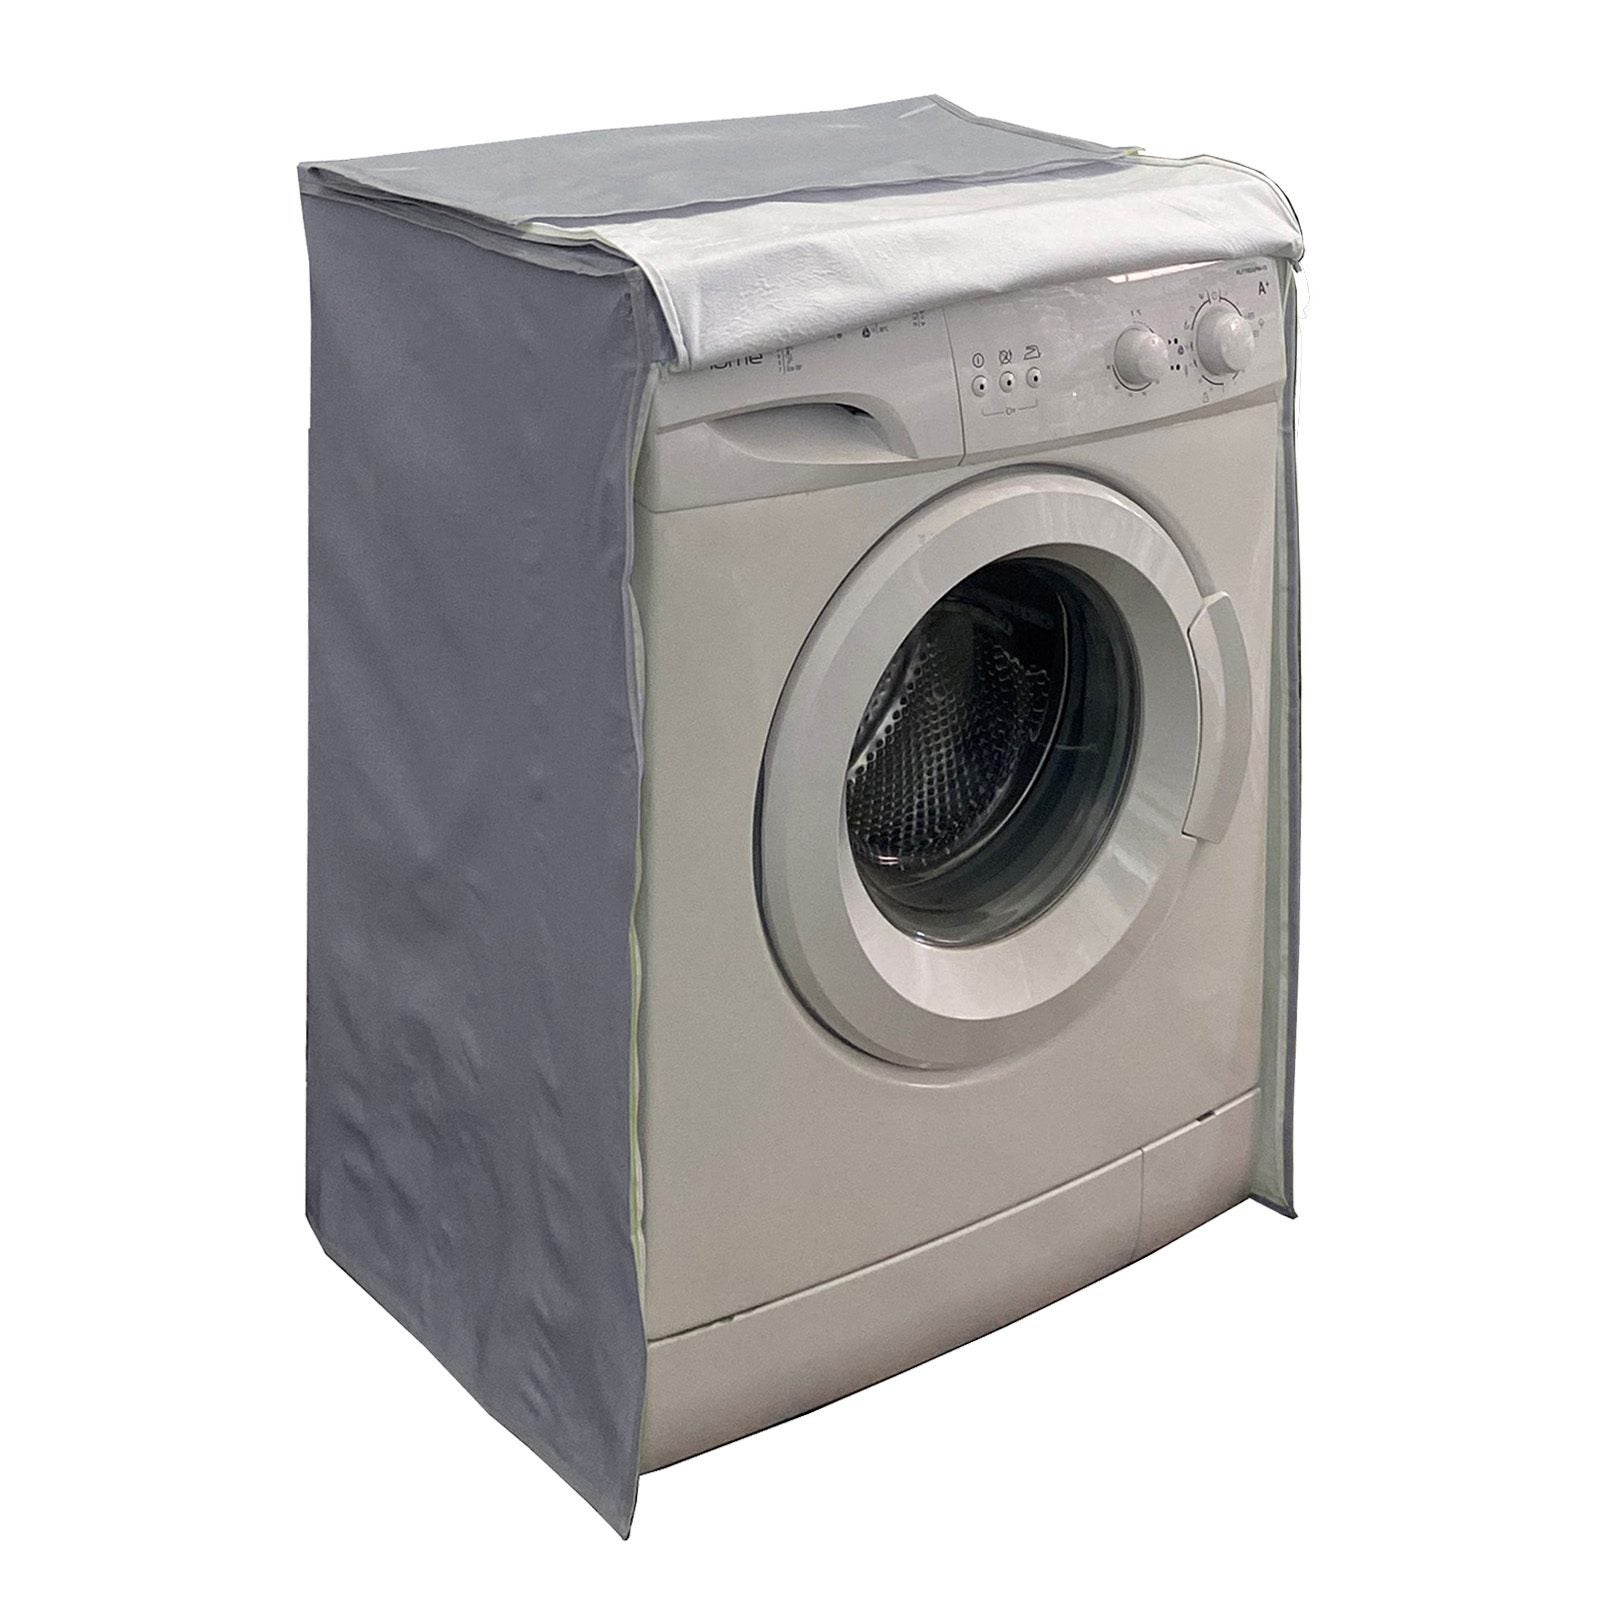 Funda para lavadora exterior impermeable carga frontal - gris 0501001-6